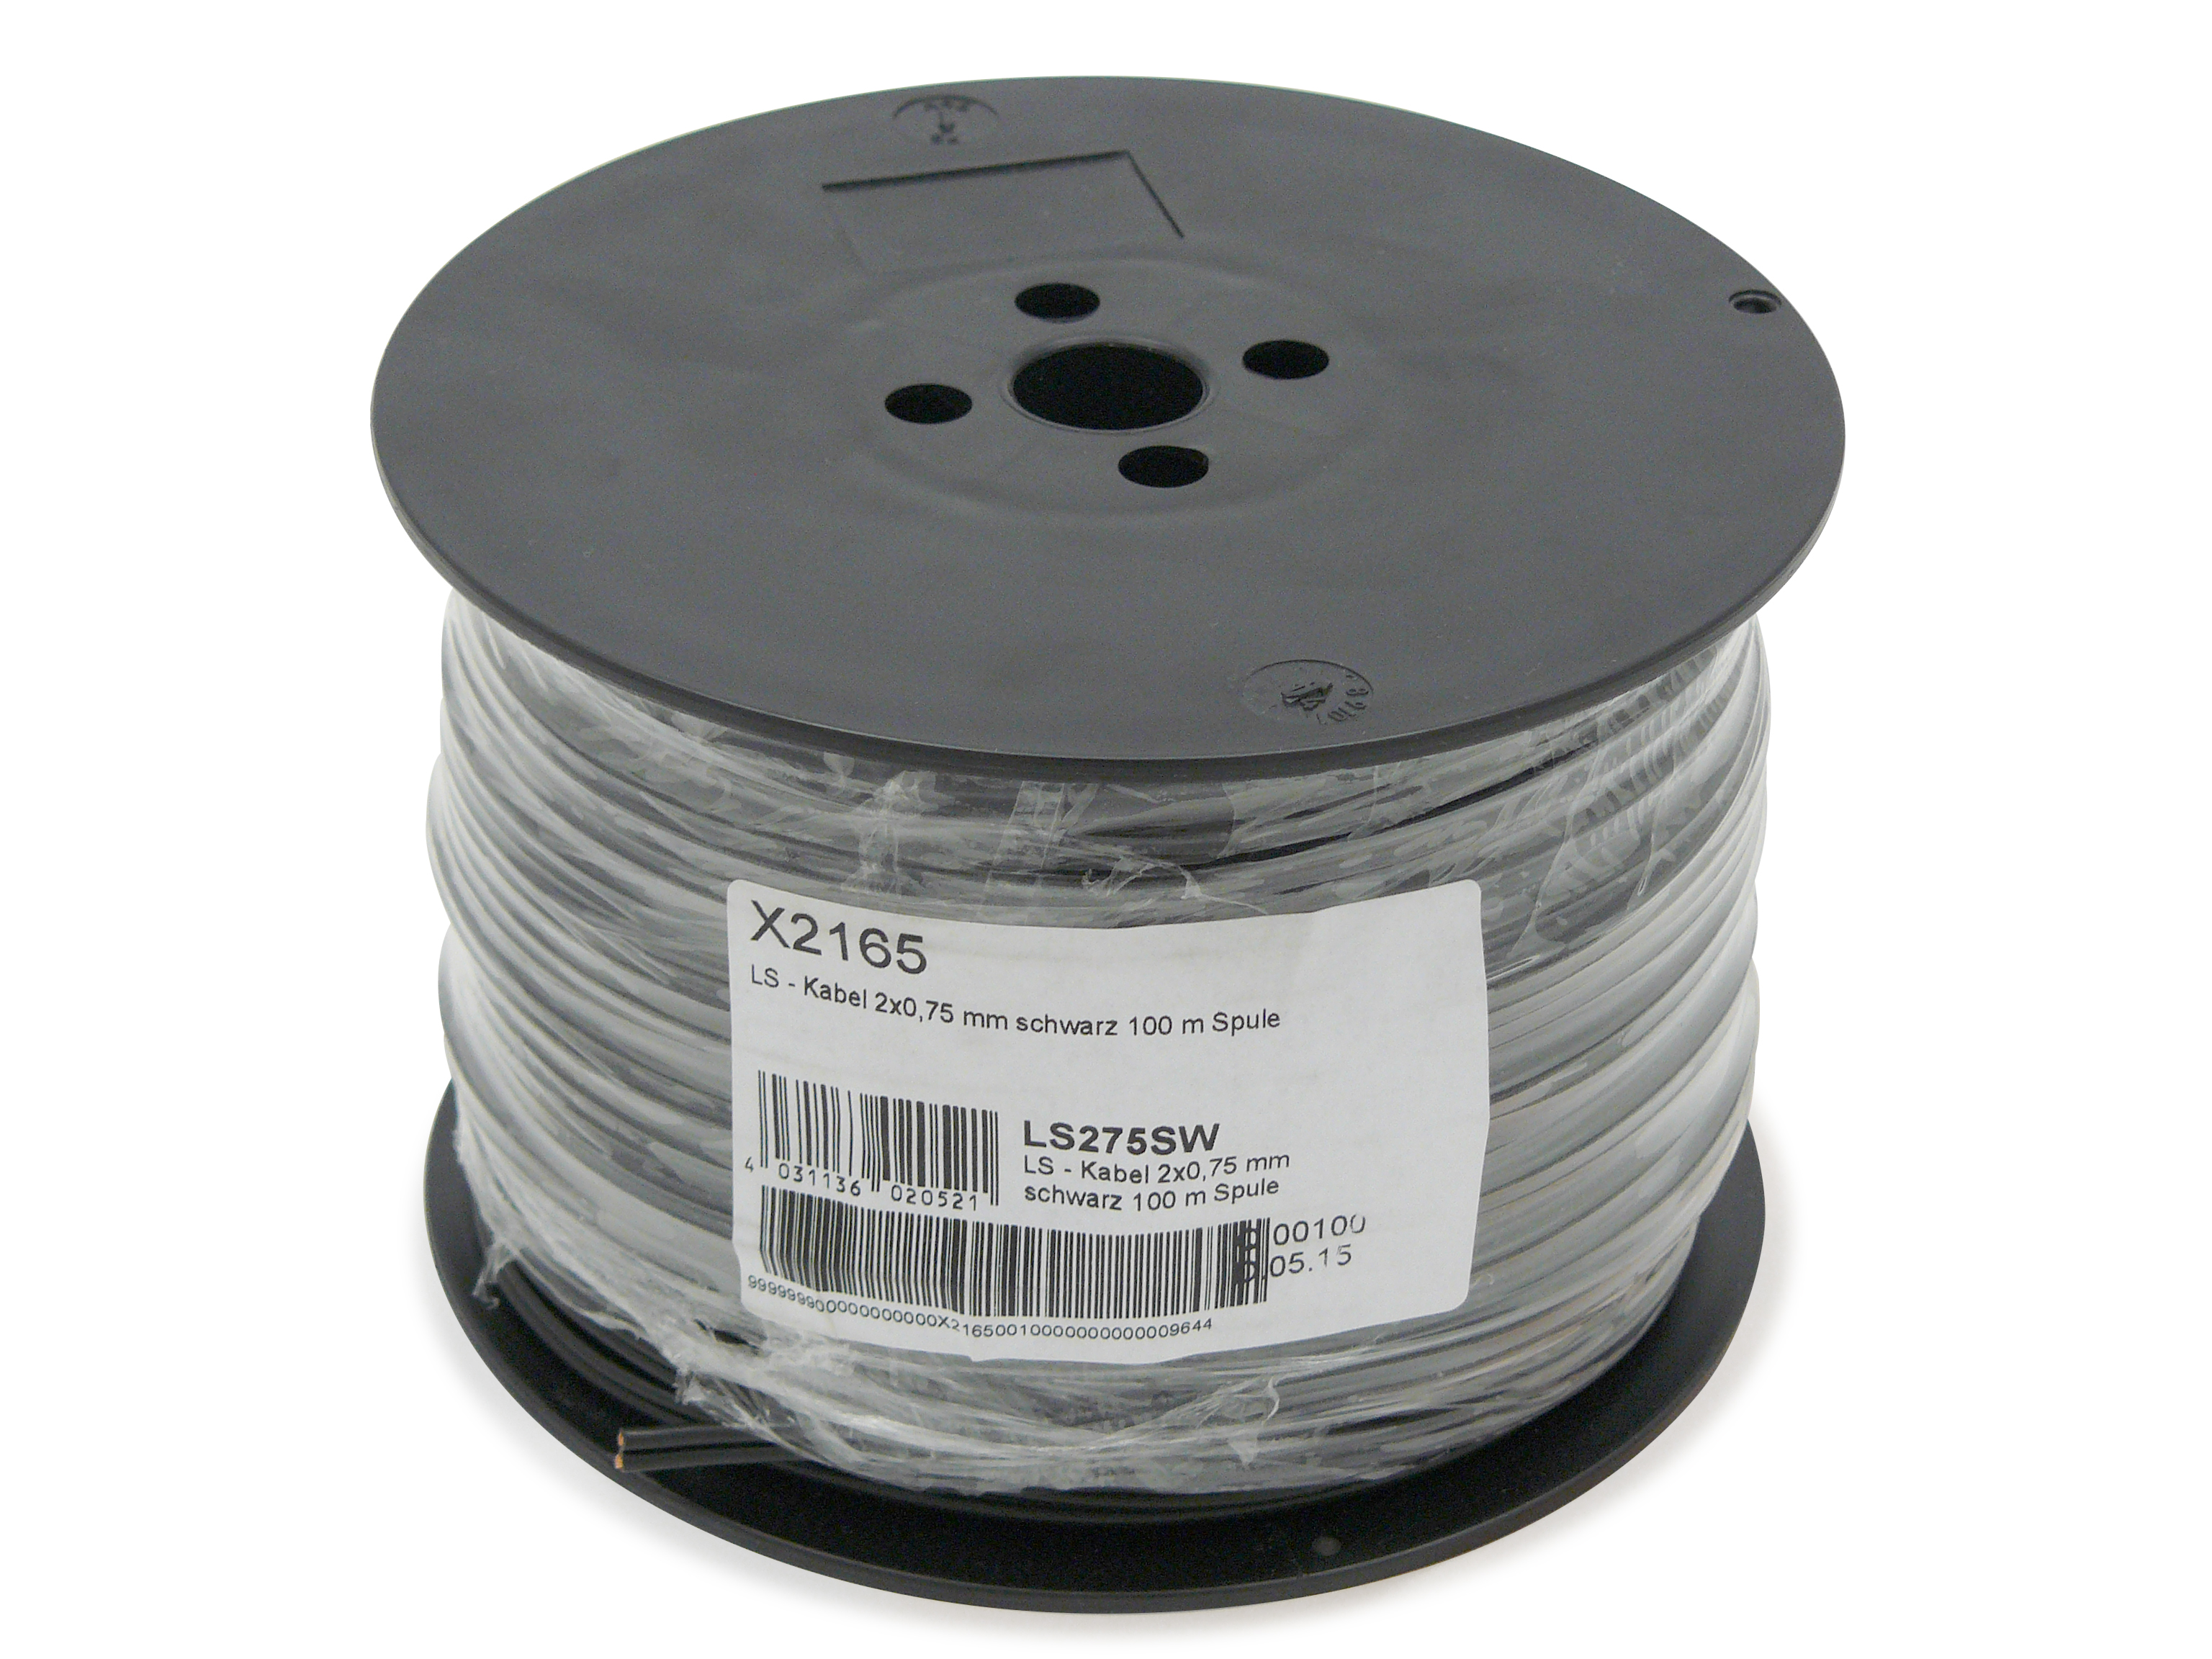 LS - Kabel 2x0,75 mm schwarz 100 m Spule